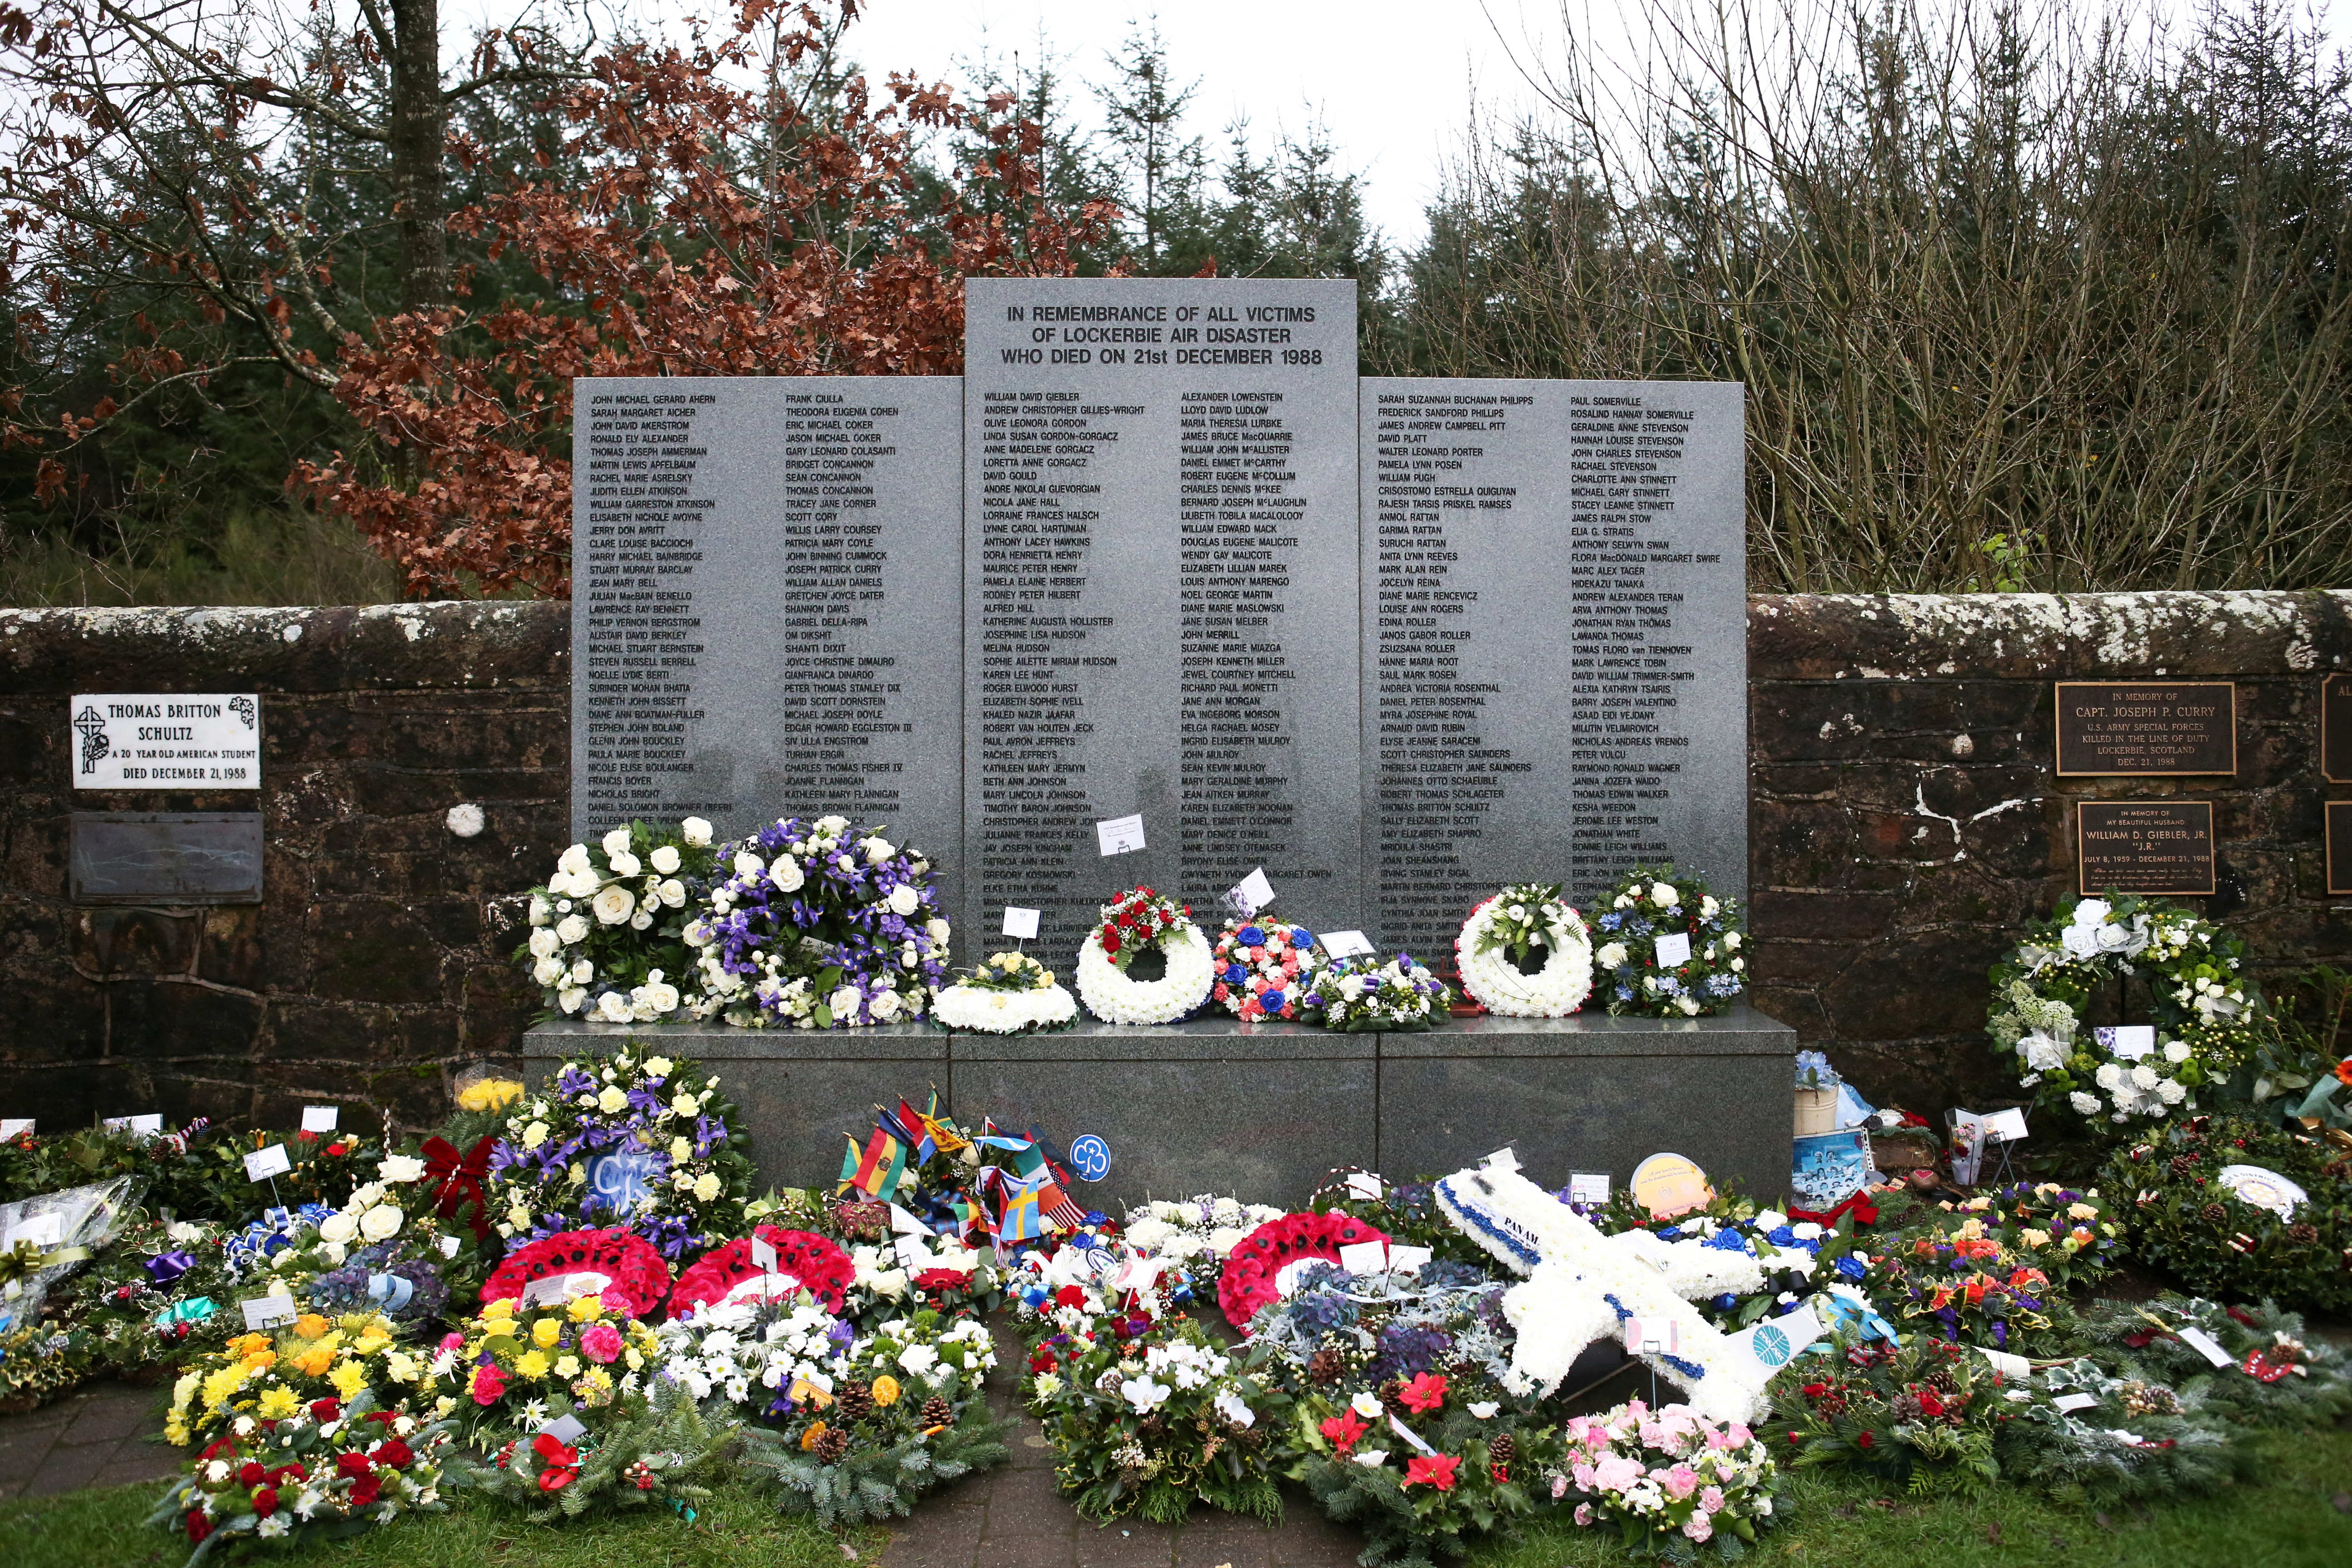 The 30th anniversary of the Lockerbie bombing